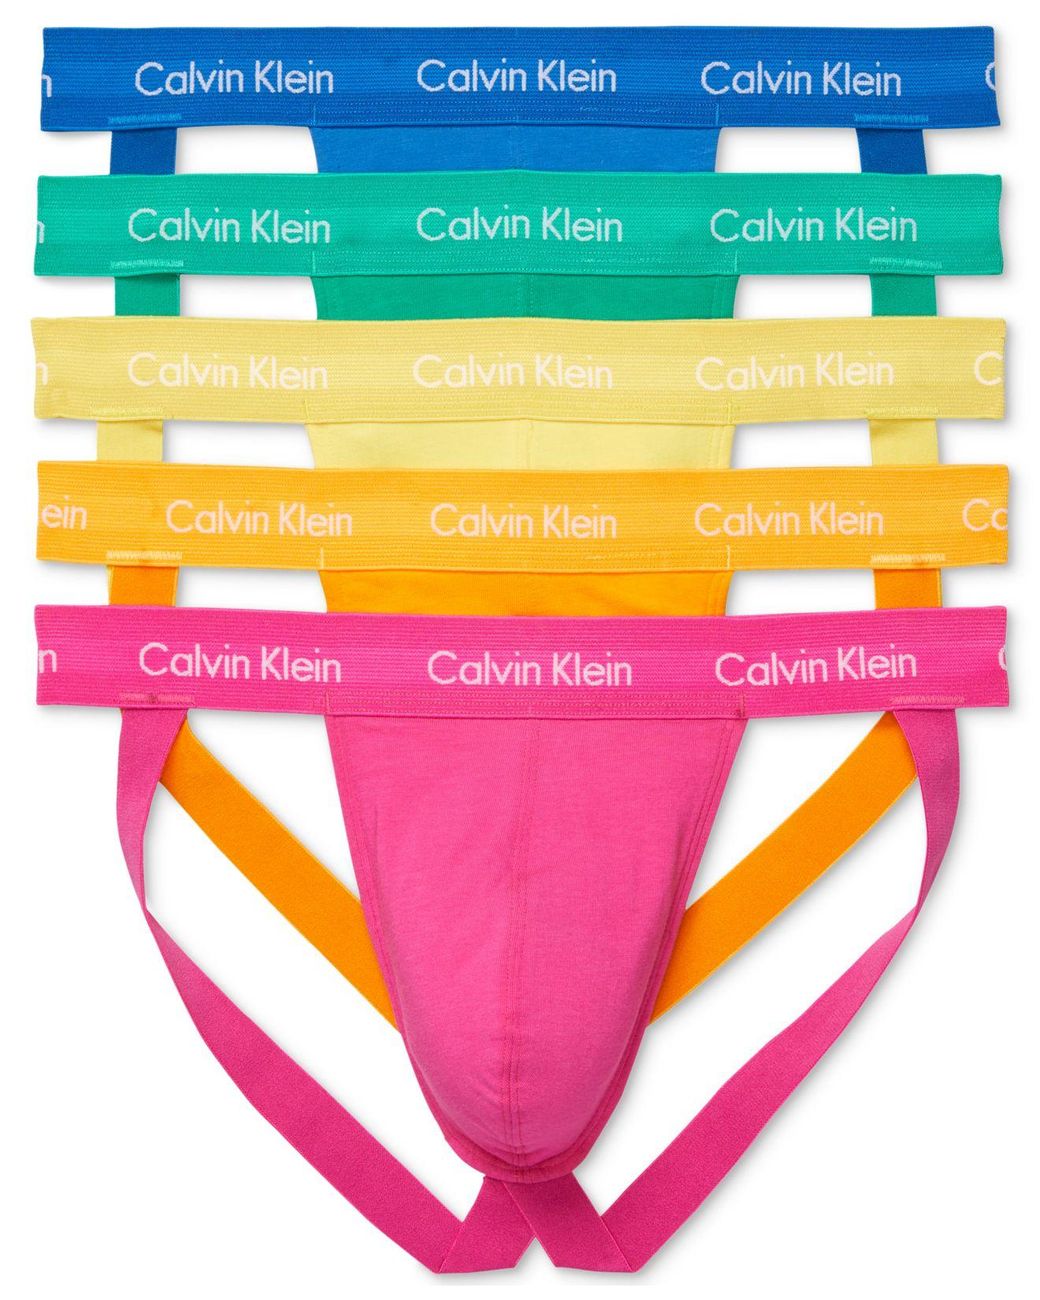 Calvin Klein Pride 5 Pack Stretch Jock Straps for Men